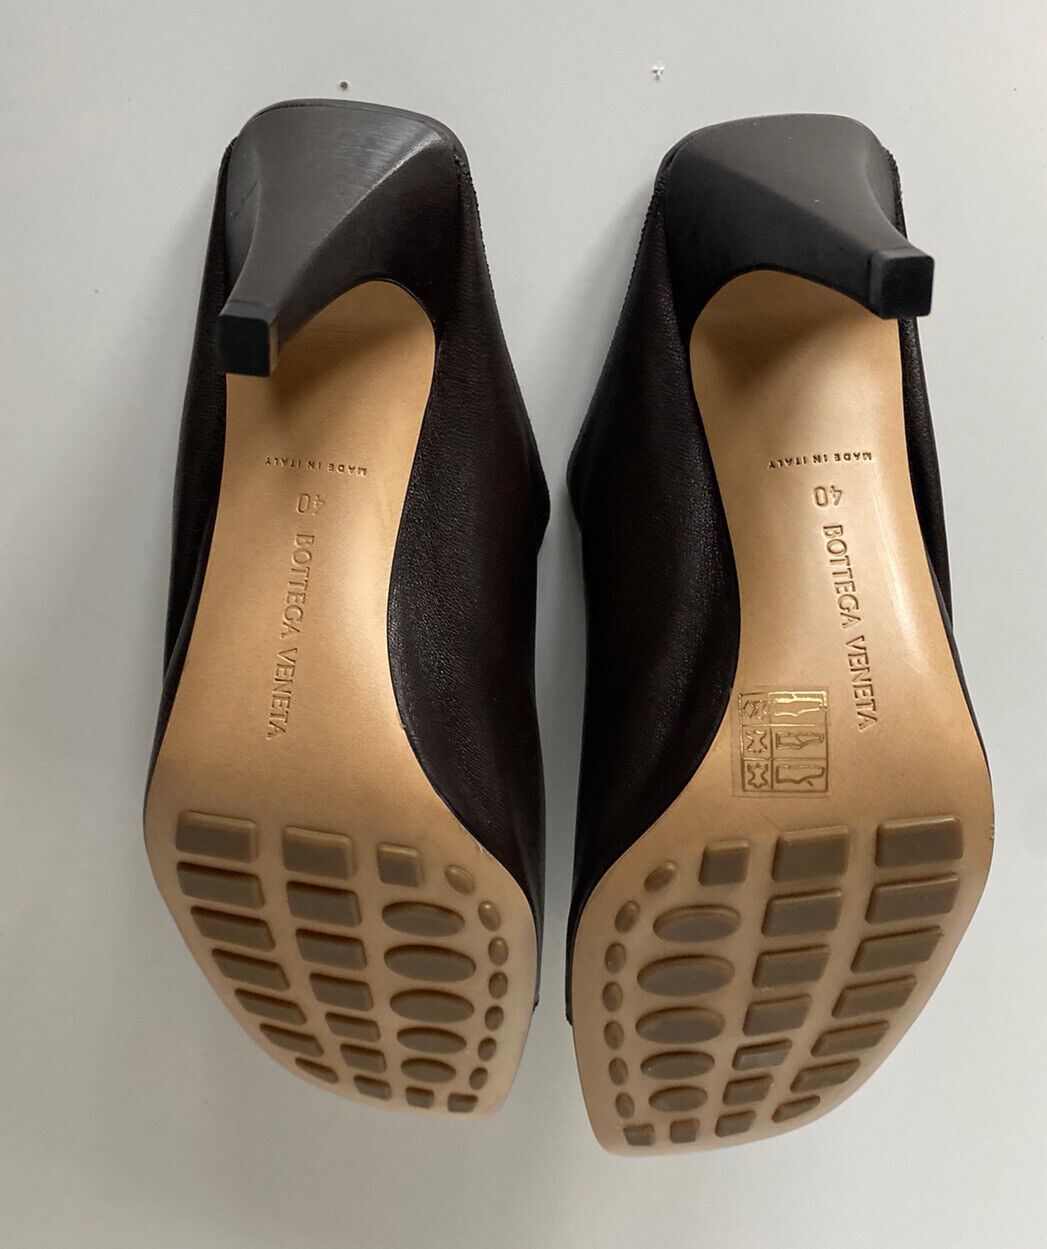 NIB $920 Bottega Veneta Leather Mules with High Vamp Brown Shoes 9.5 US 618760